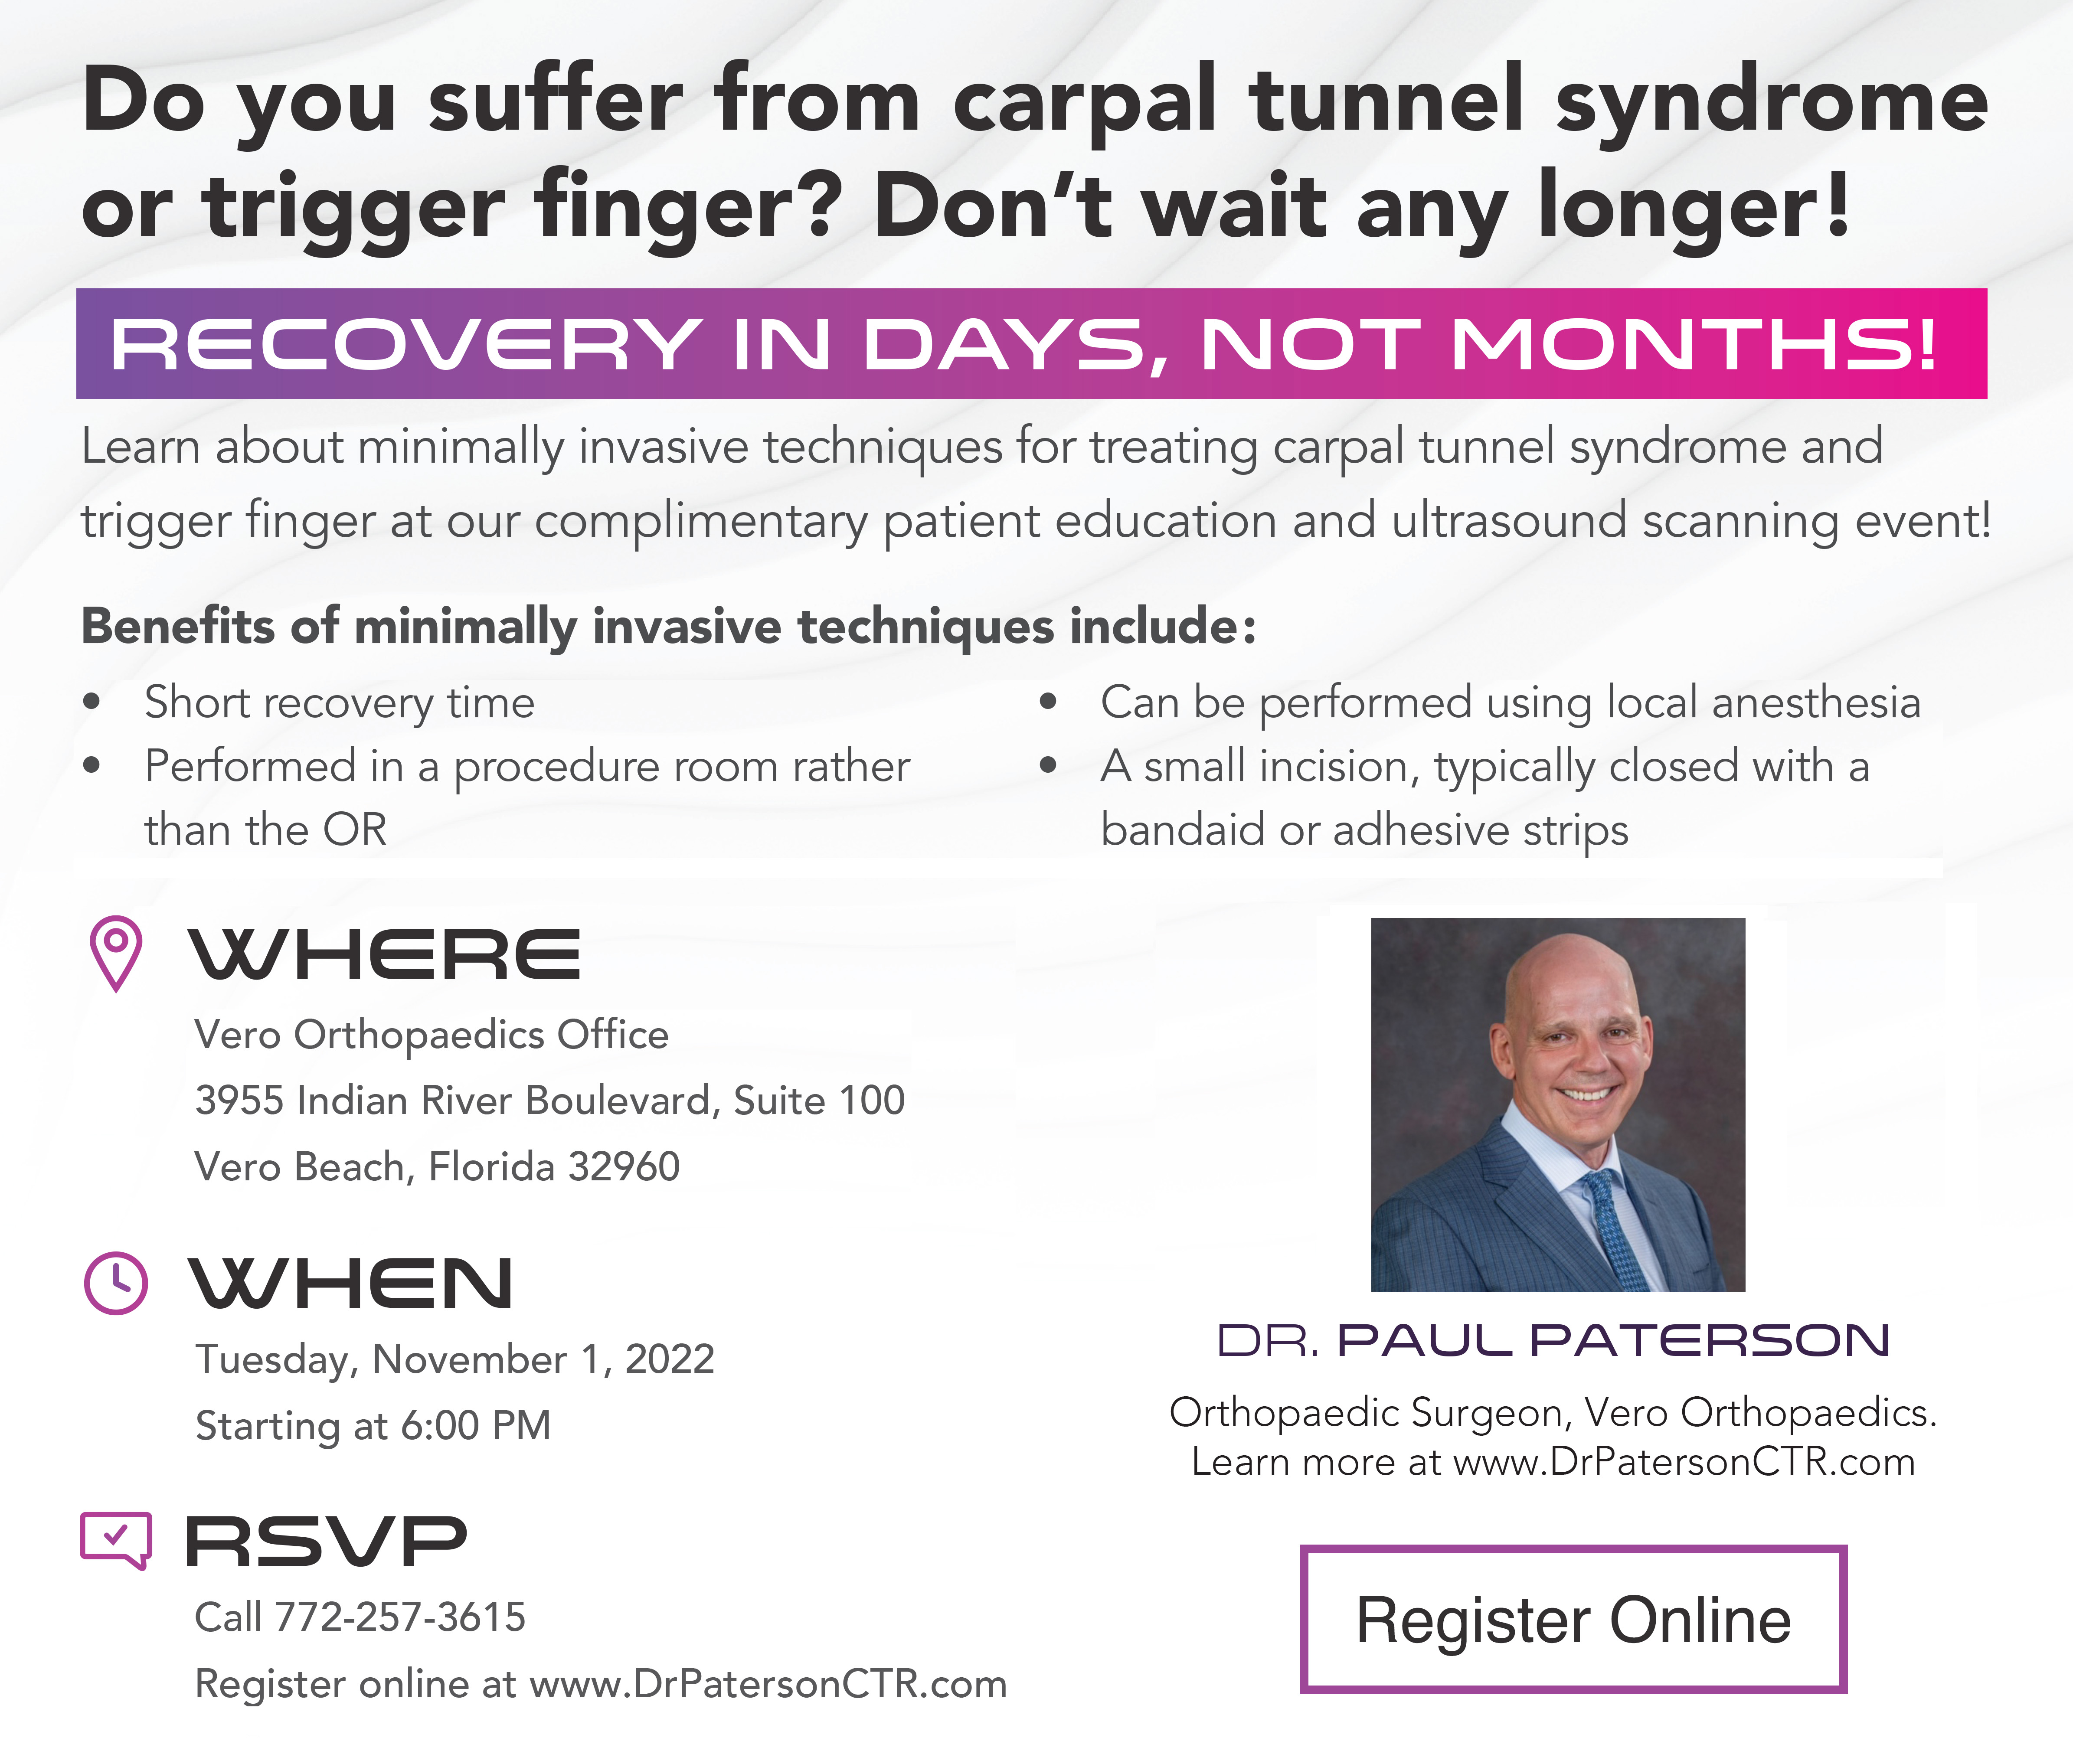 Dr. Paterson Carpal Tunnel Syndrome/Trigger Finger Seminar